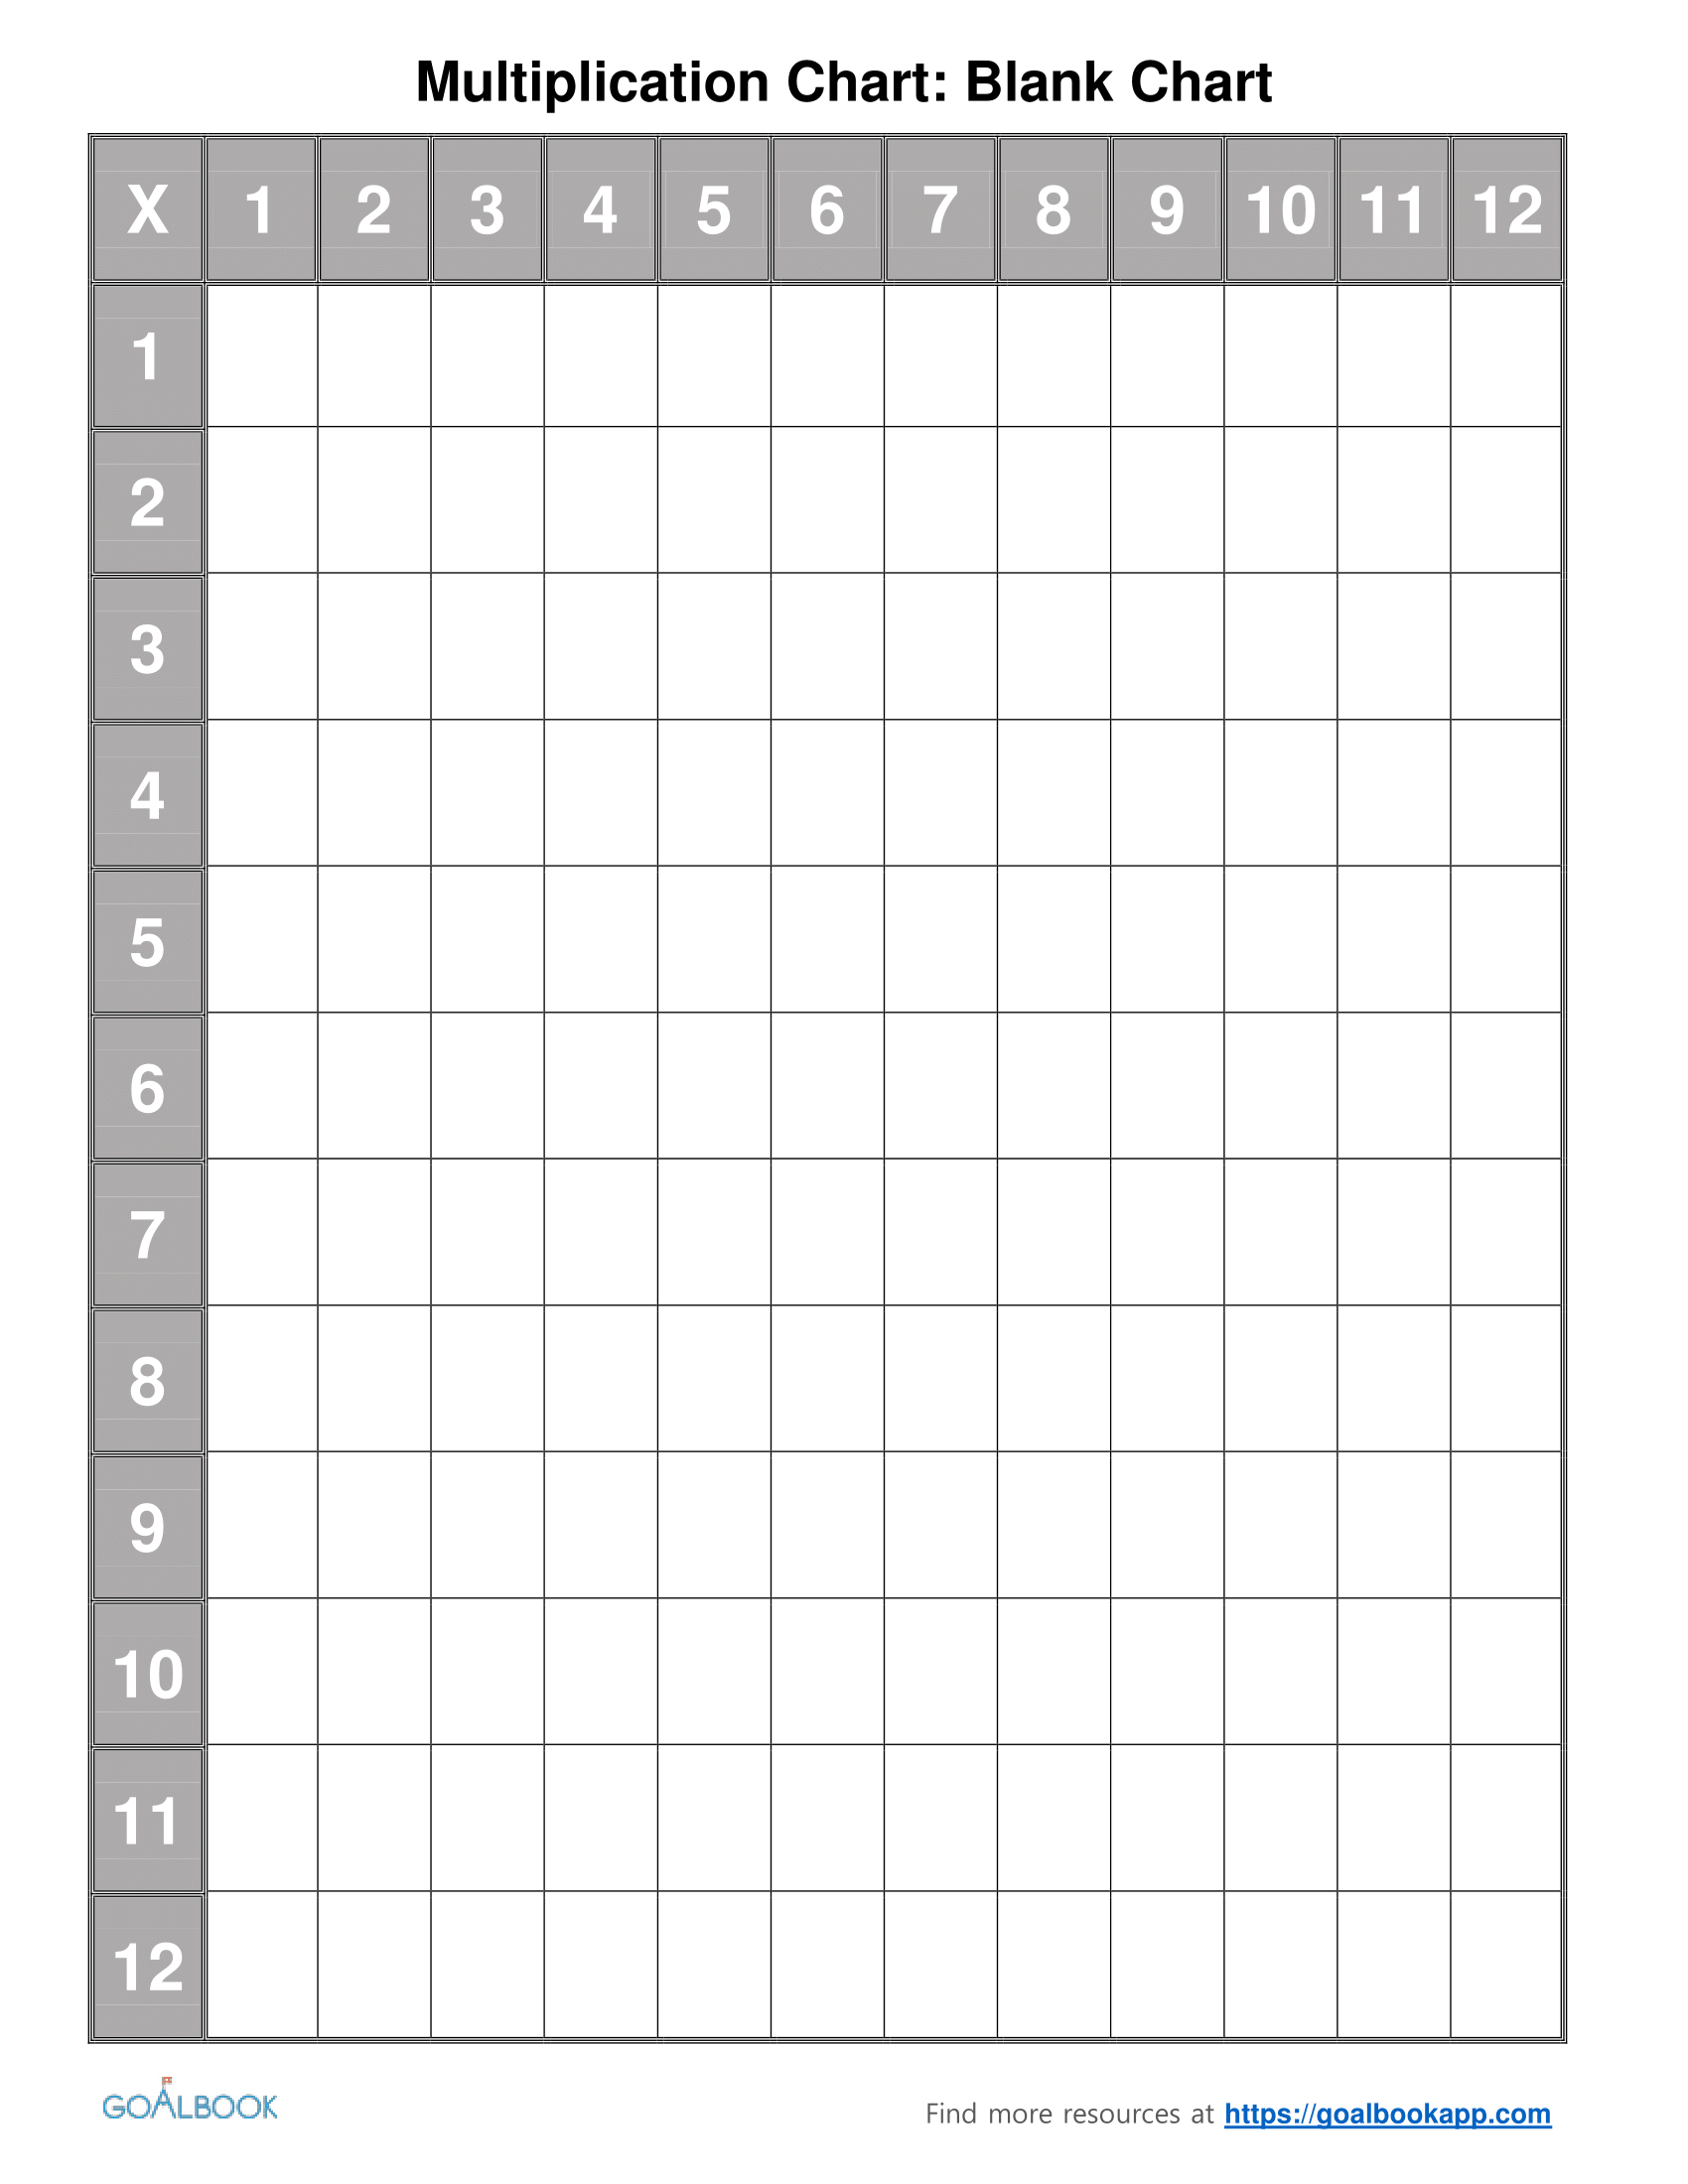 Multiplication Table Sheet Blank | Brokeasshome.com